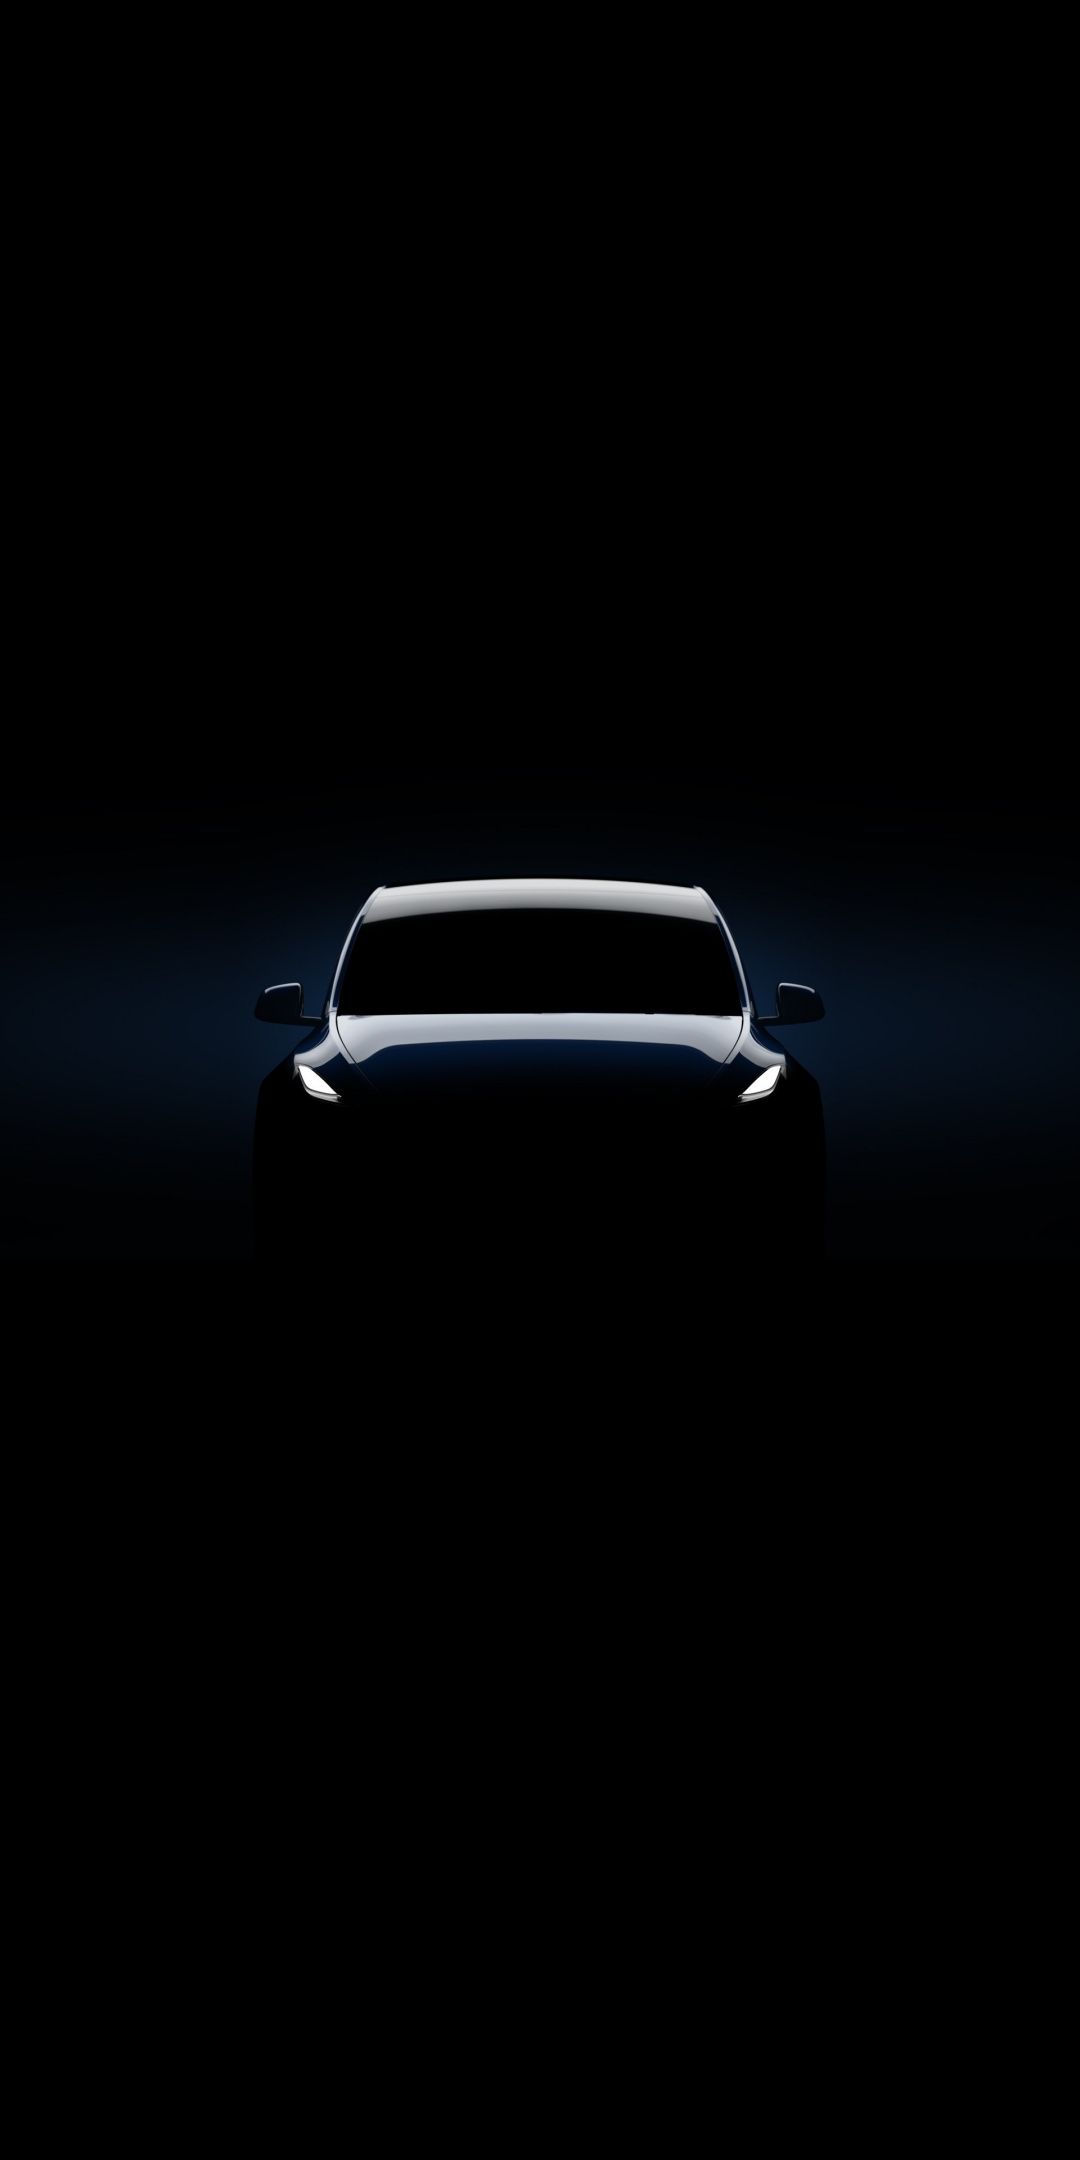 Tesla Hintergrundbild 1080x2160. Tesla Model Y, dark, minimal, 1080x2160 wallpaper. Black car wallpaper, Car wallpaper, Tesla logo